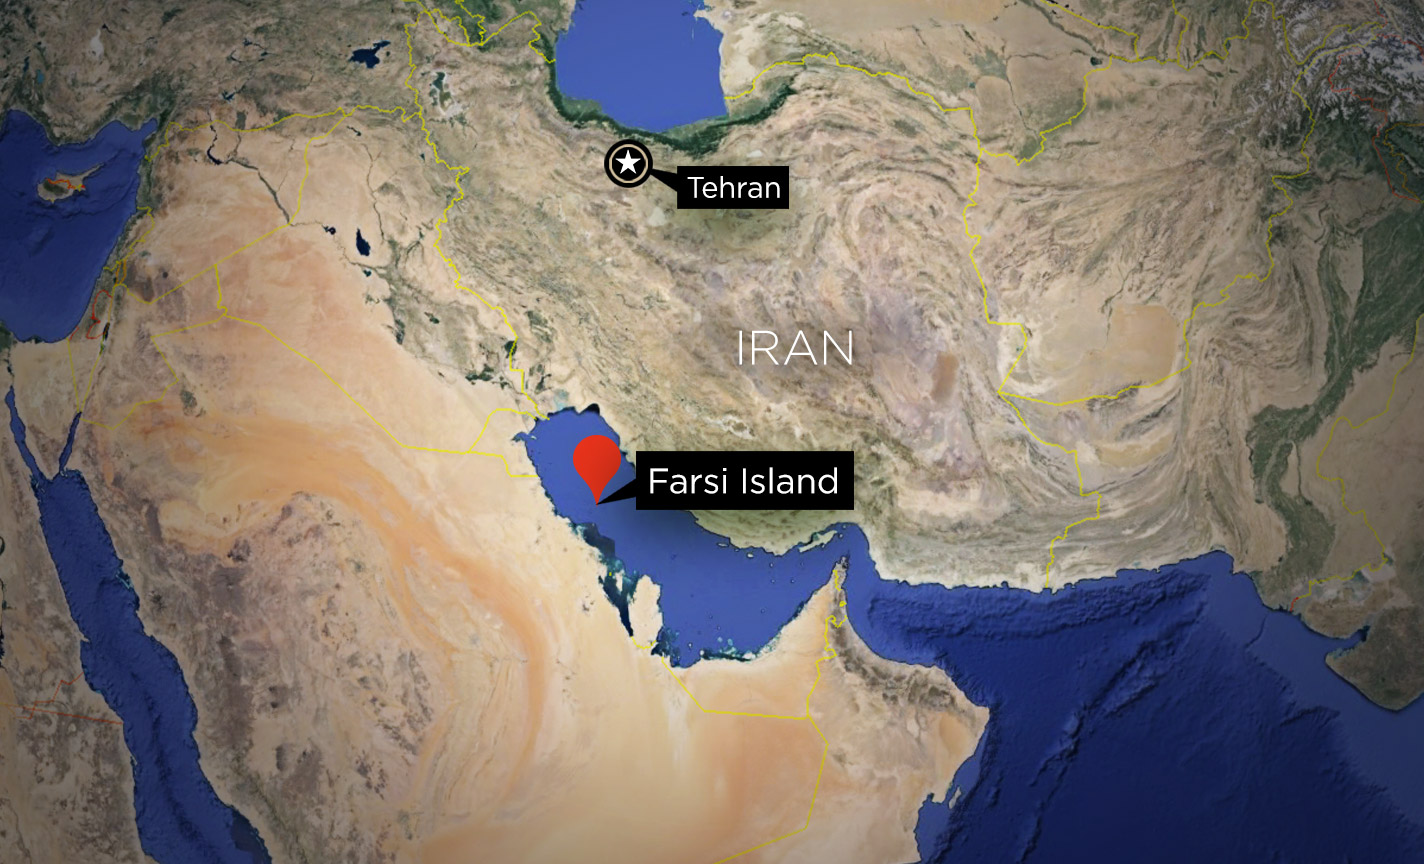 Farsi Island Map - ABC News